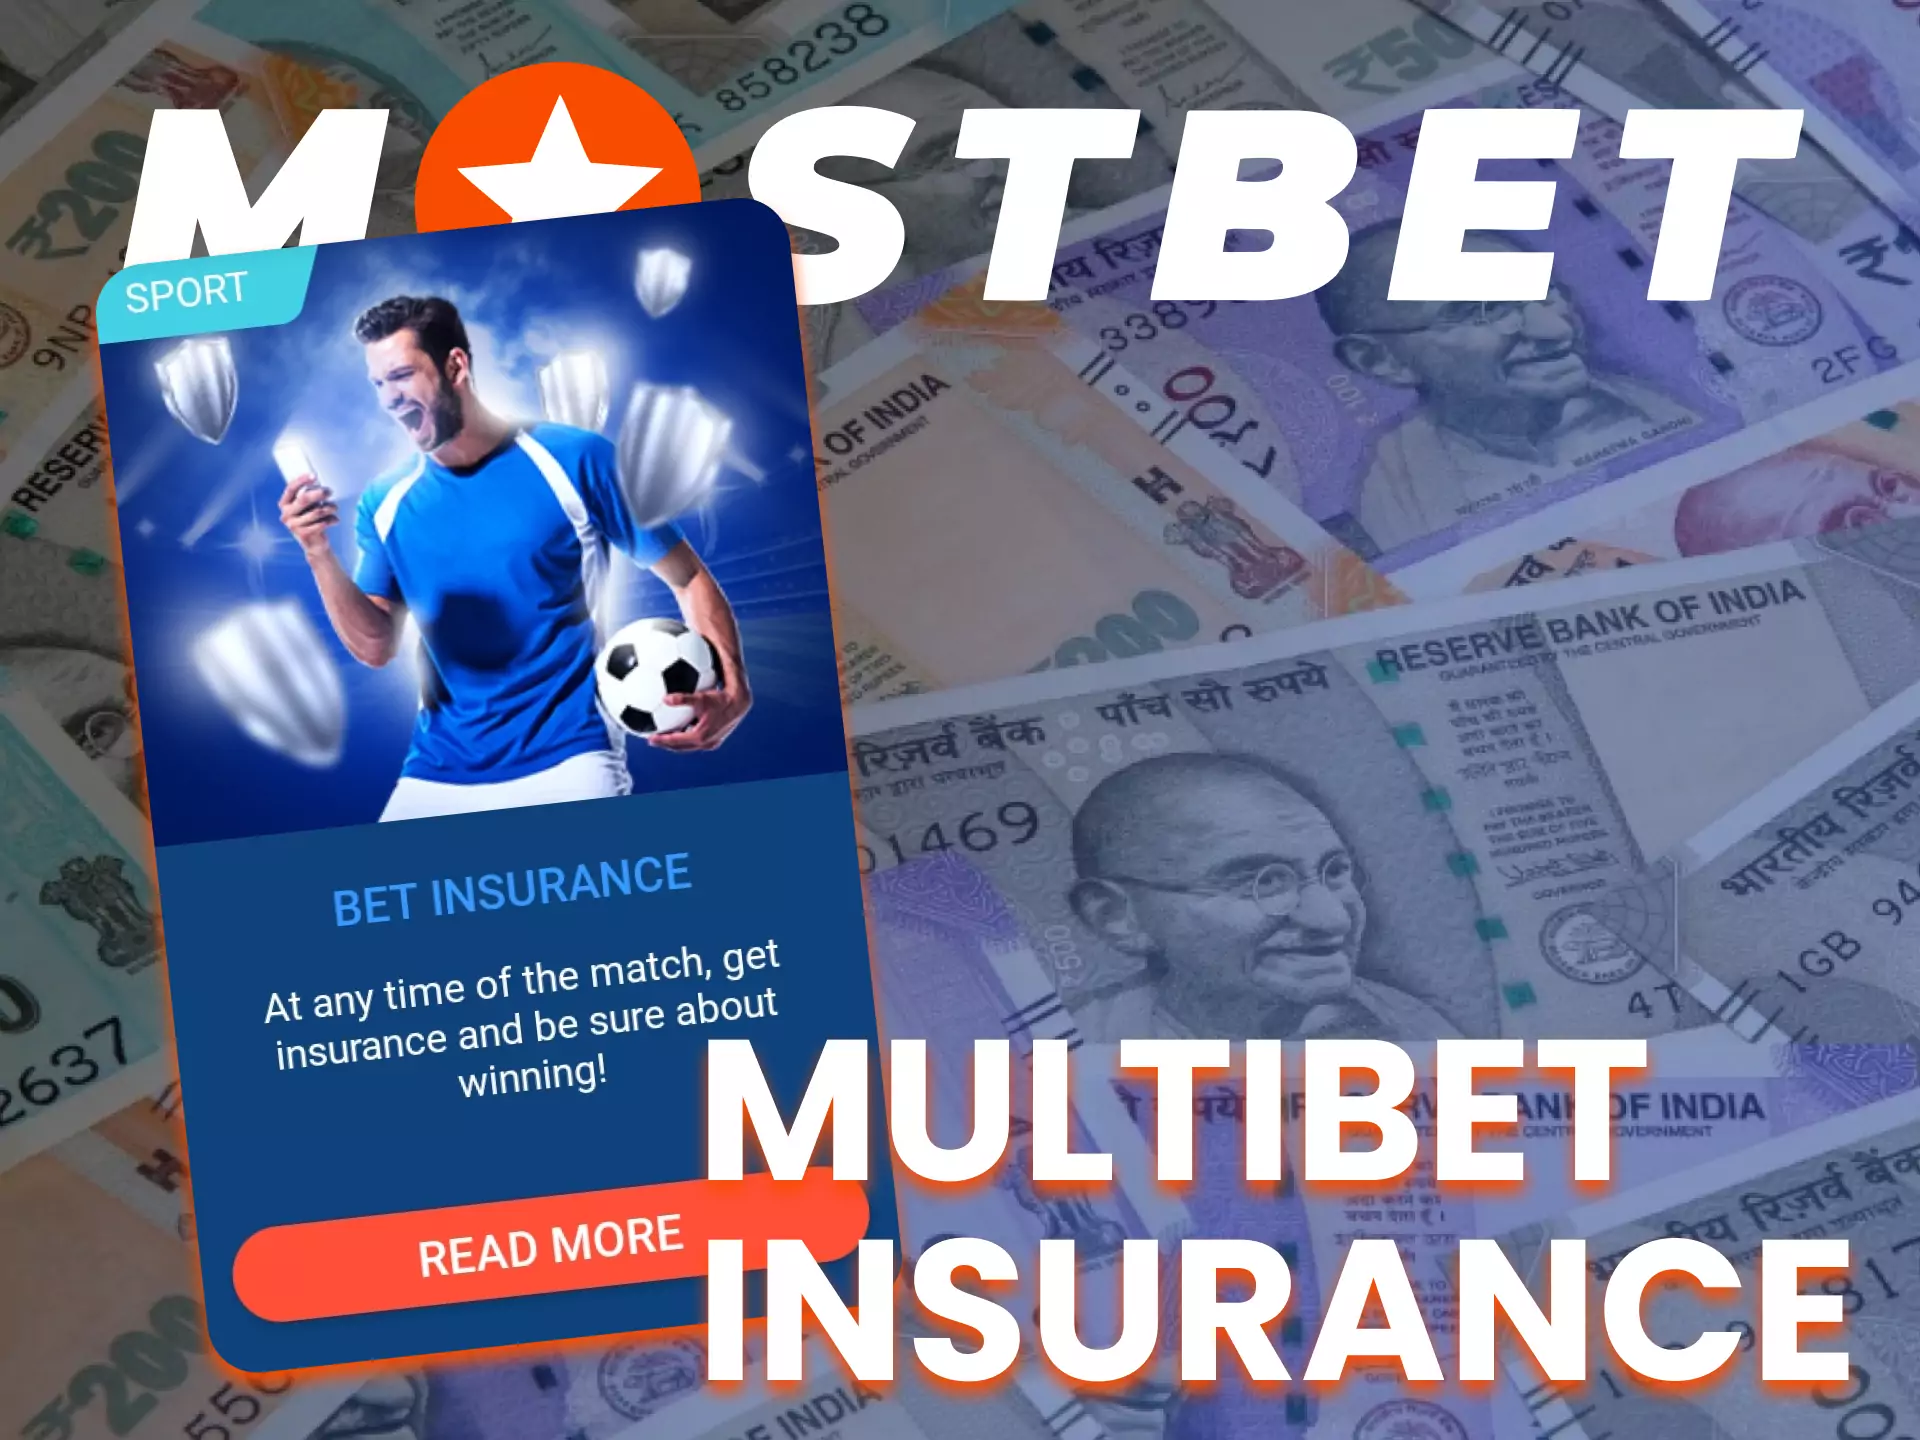 On the Mostbet app get a special bonus multibet insurance.